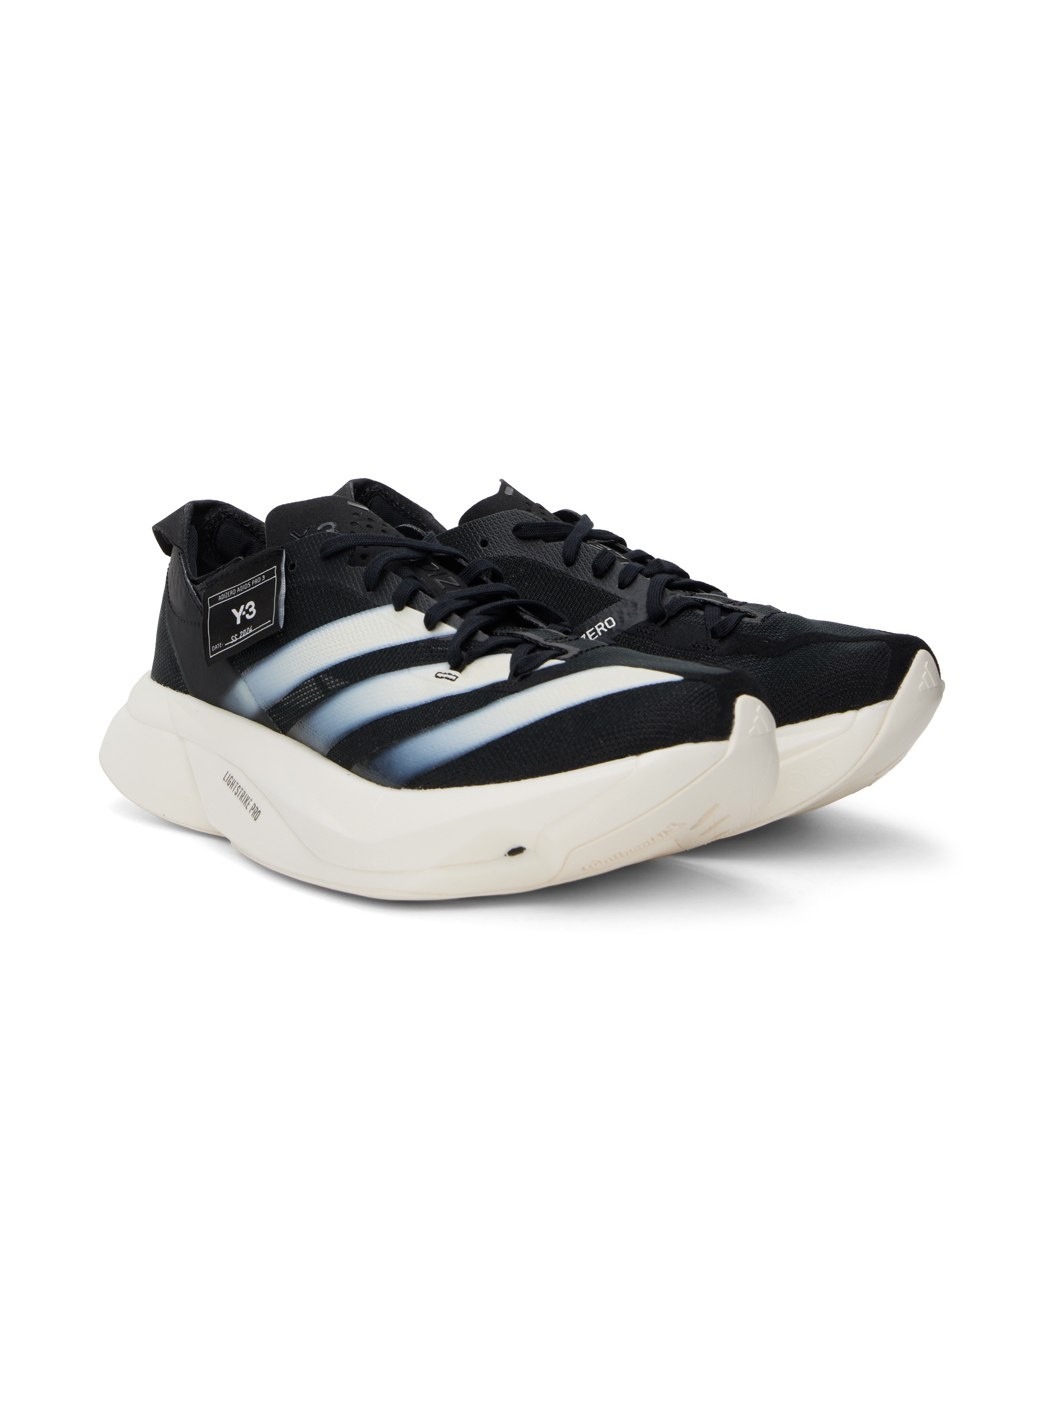 Black Adios Pro 3.0 Sneakers - 4